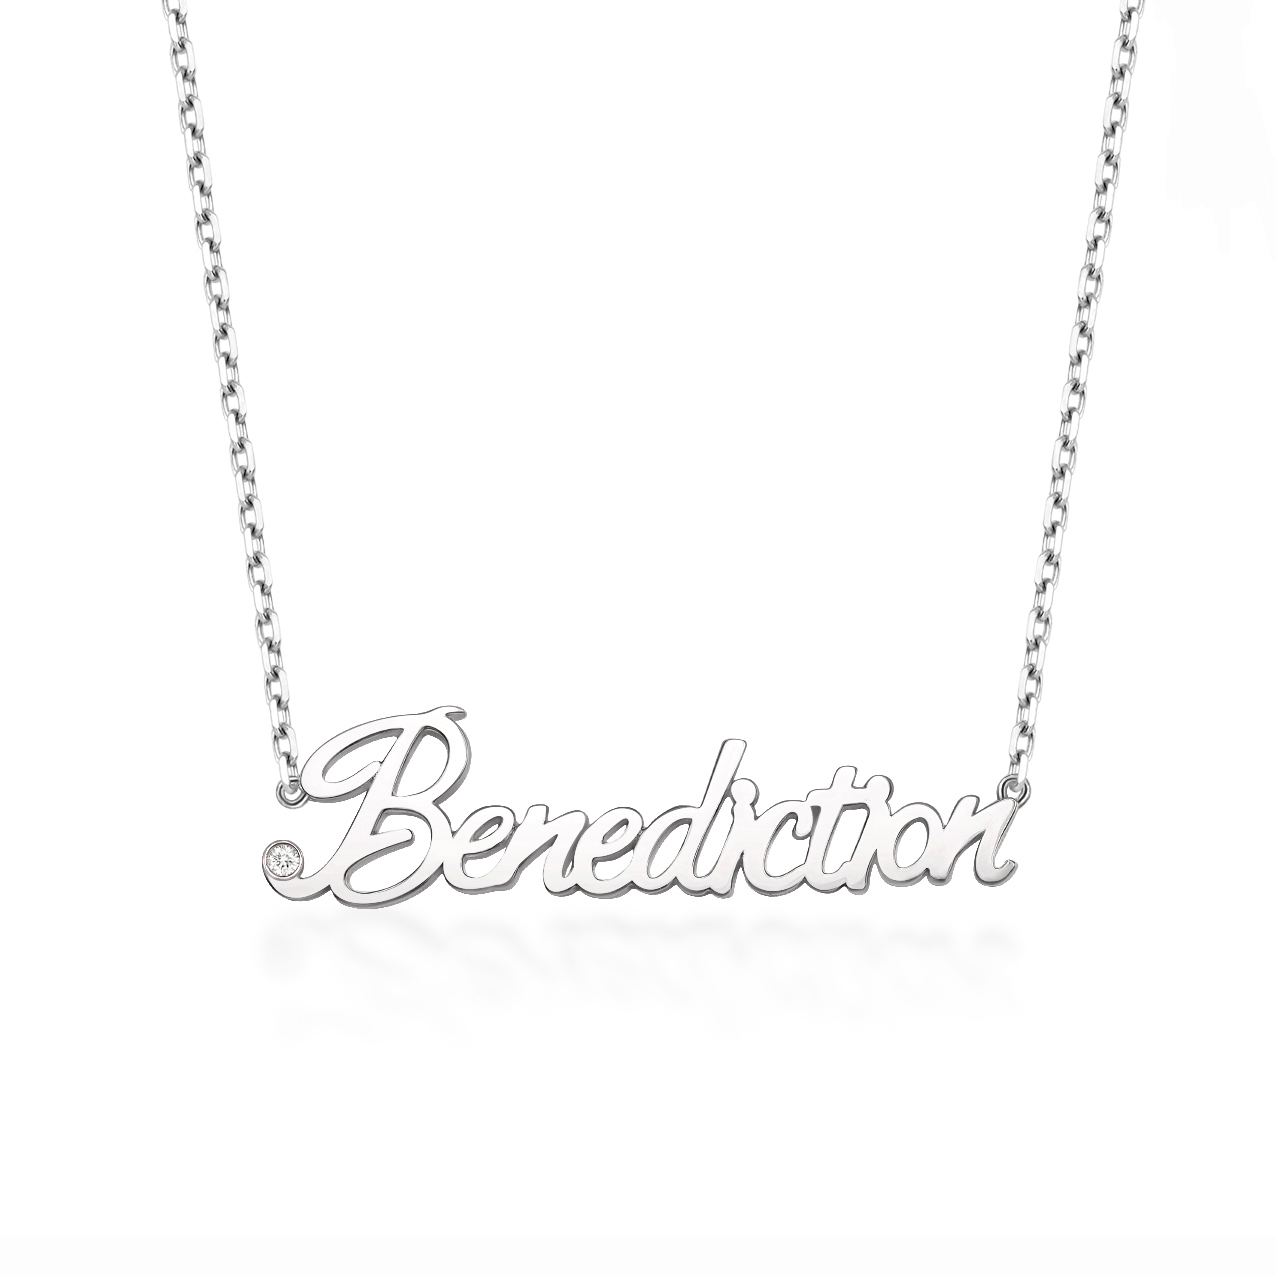 benediction necklace